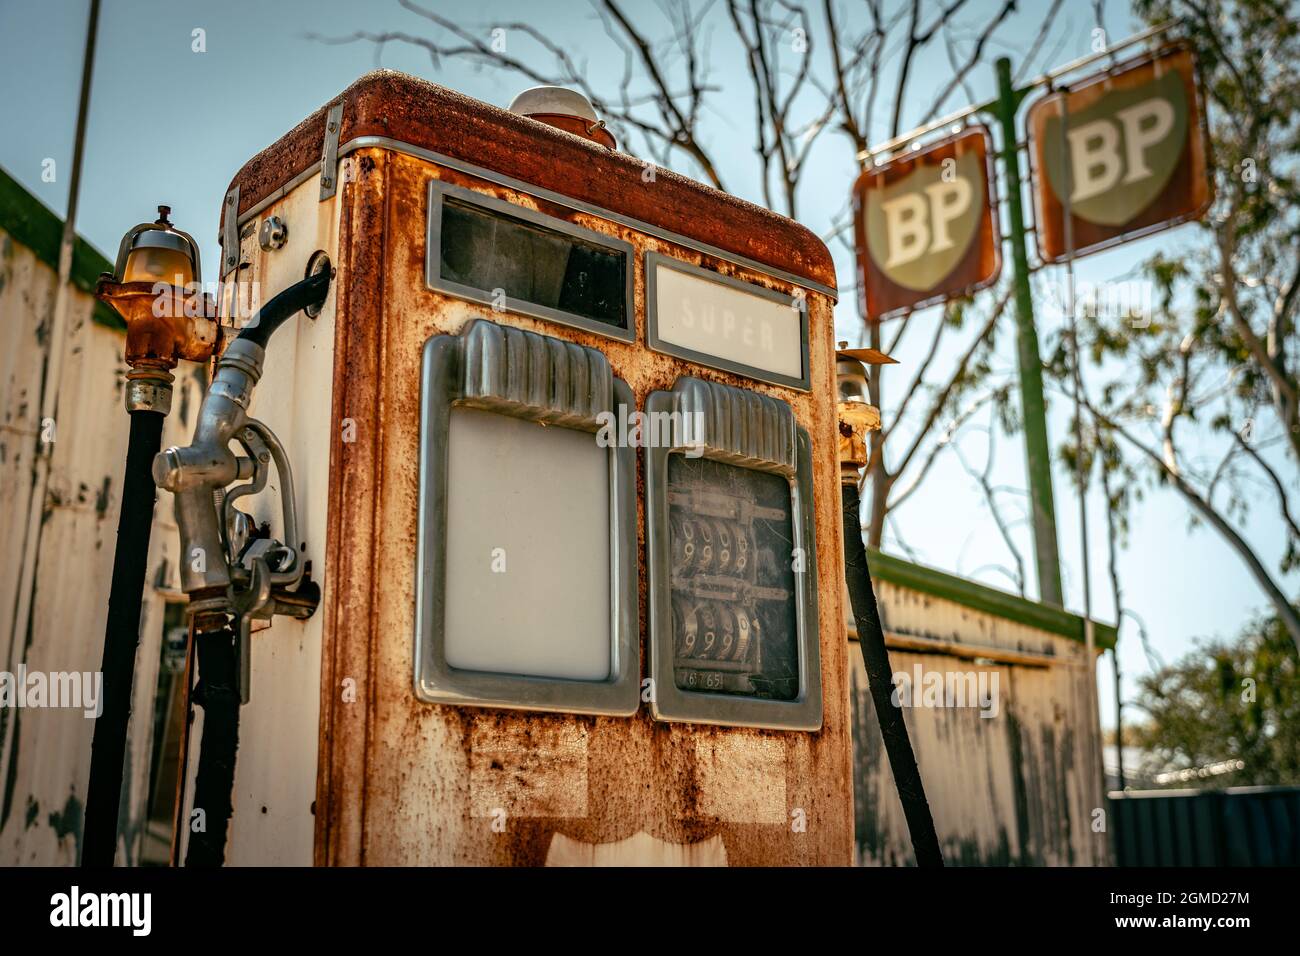 Blackall, Queensland, Australia - Old abandoned BP fuel pump Stock Photo